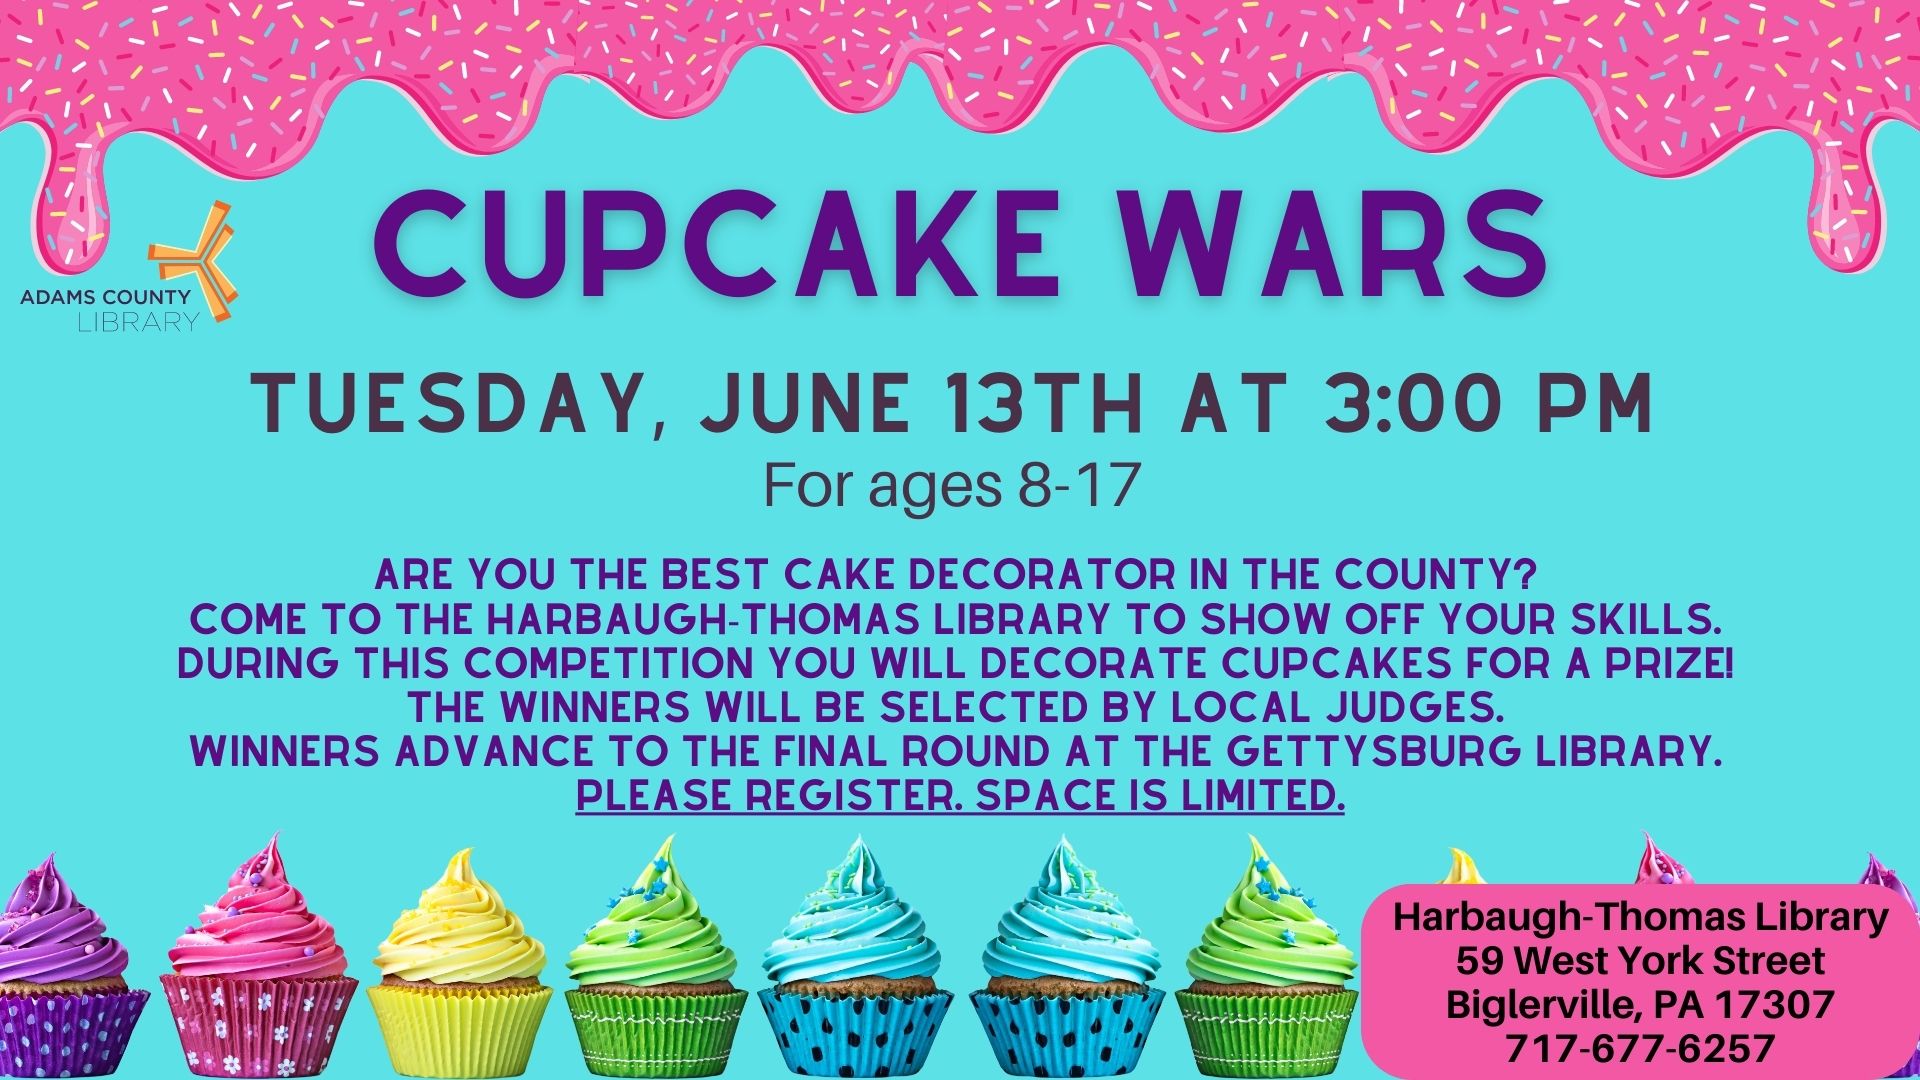 Cupcake Wars Tuesday June 13 at 3:00 PM